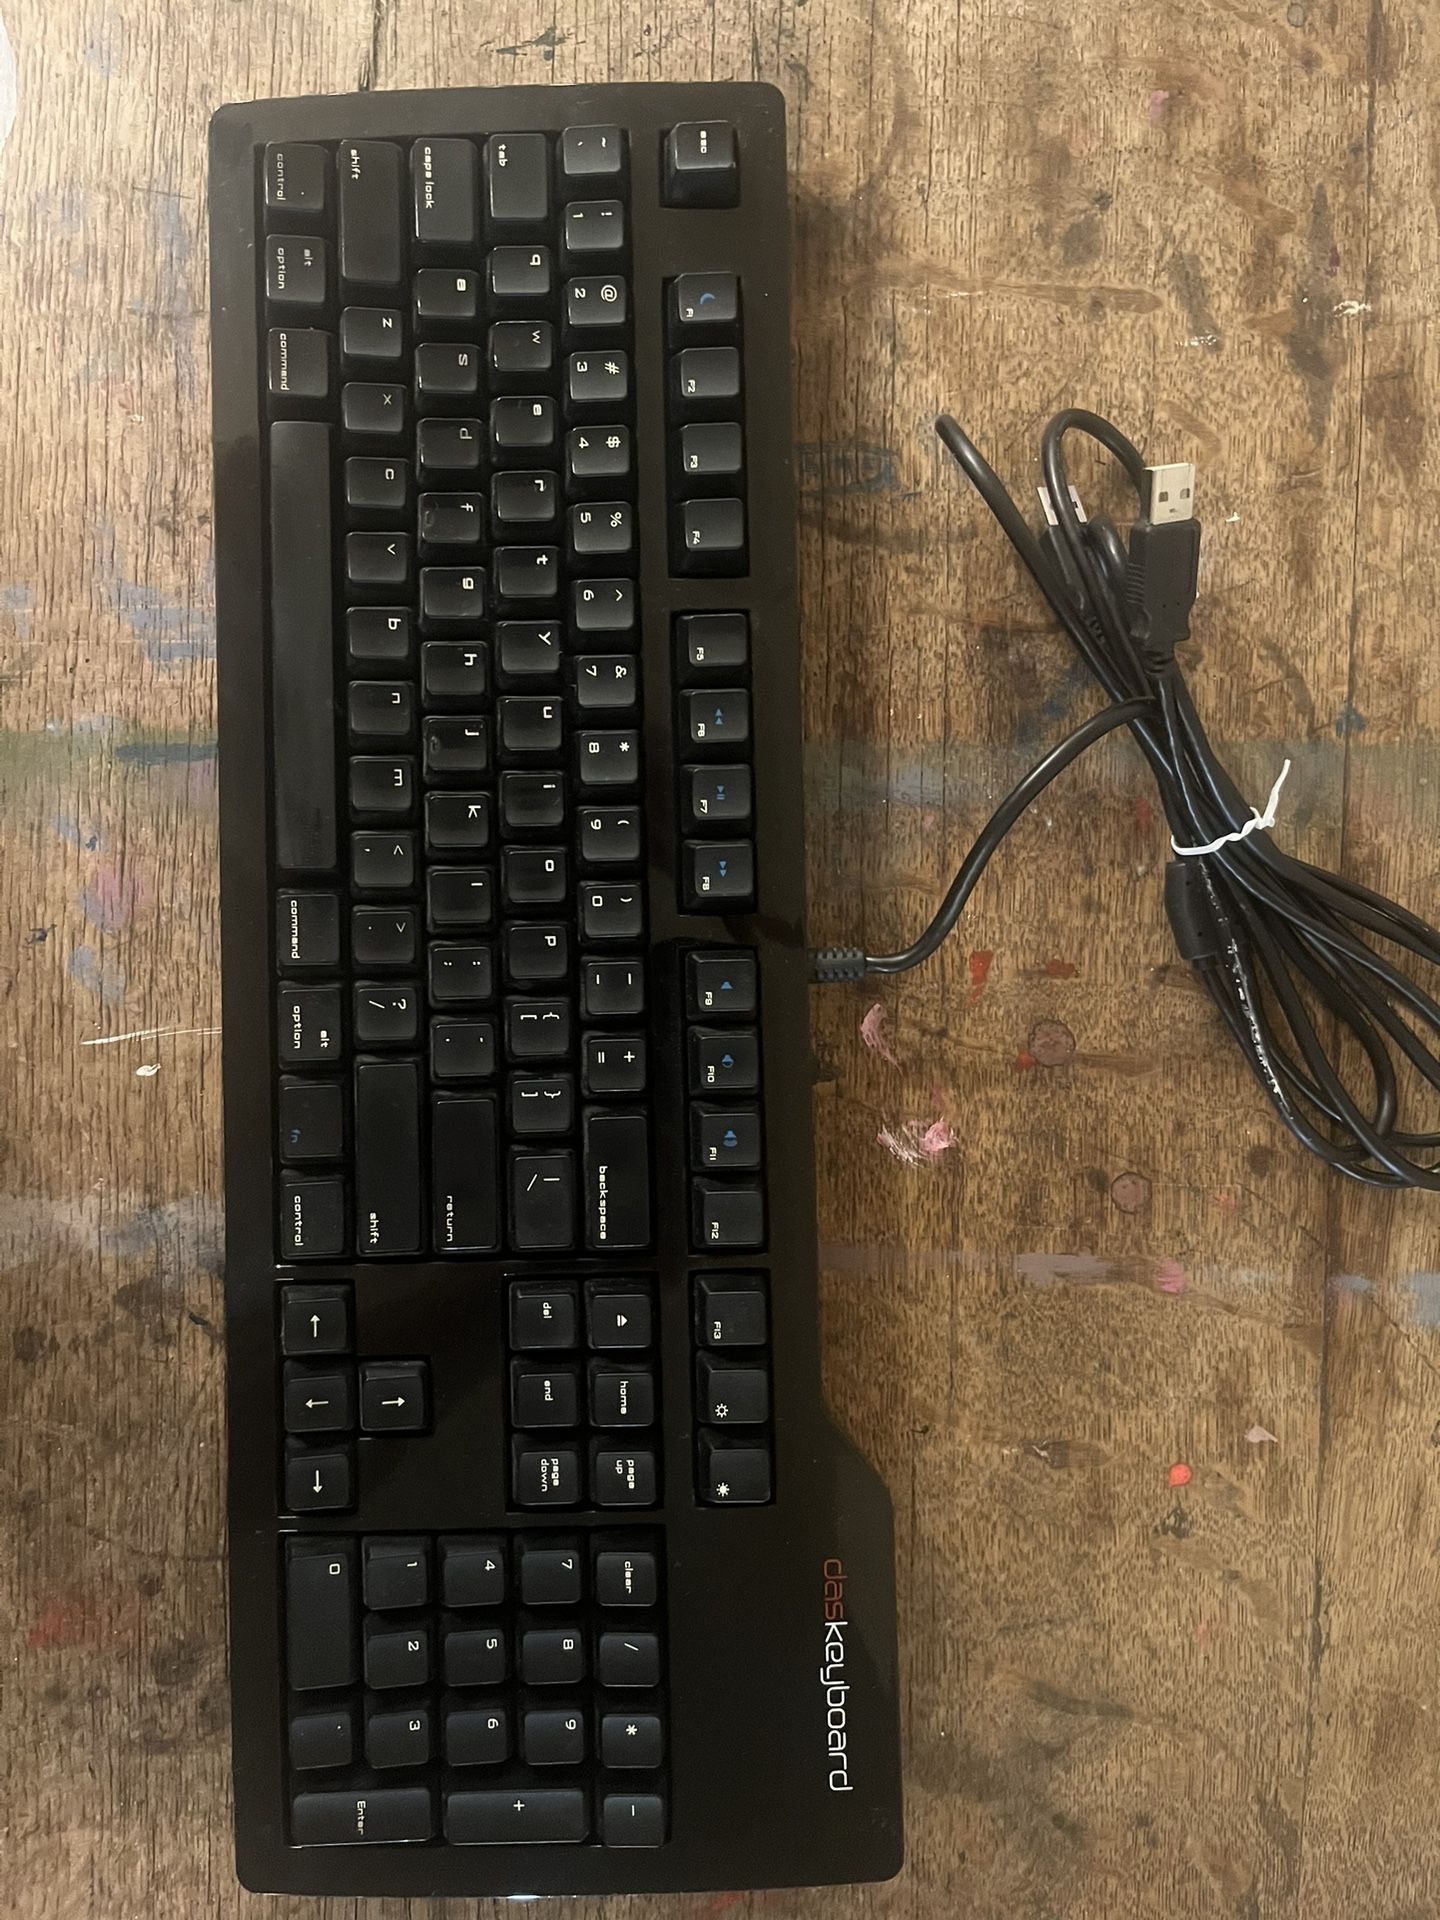 Mechanical keyboard. DAS Keyboard.